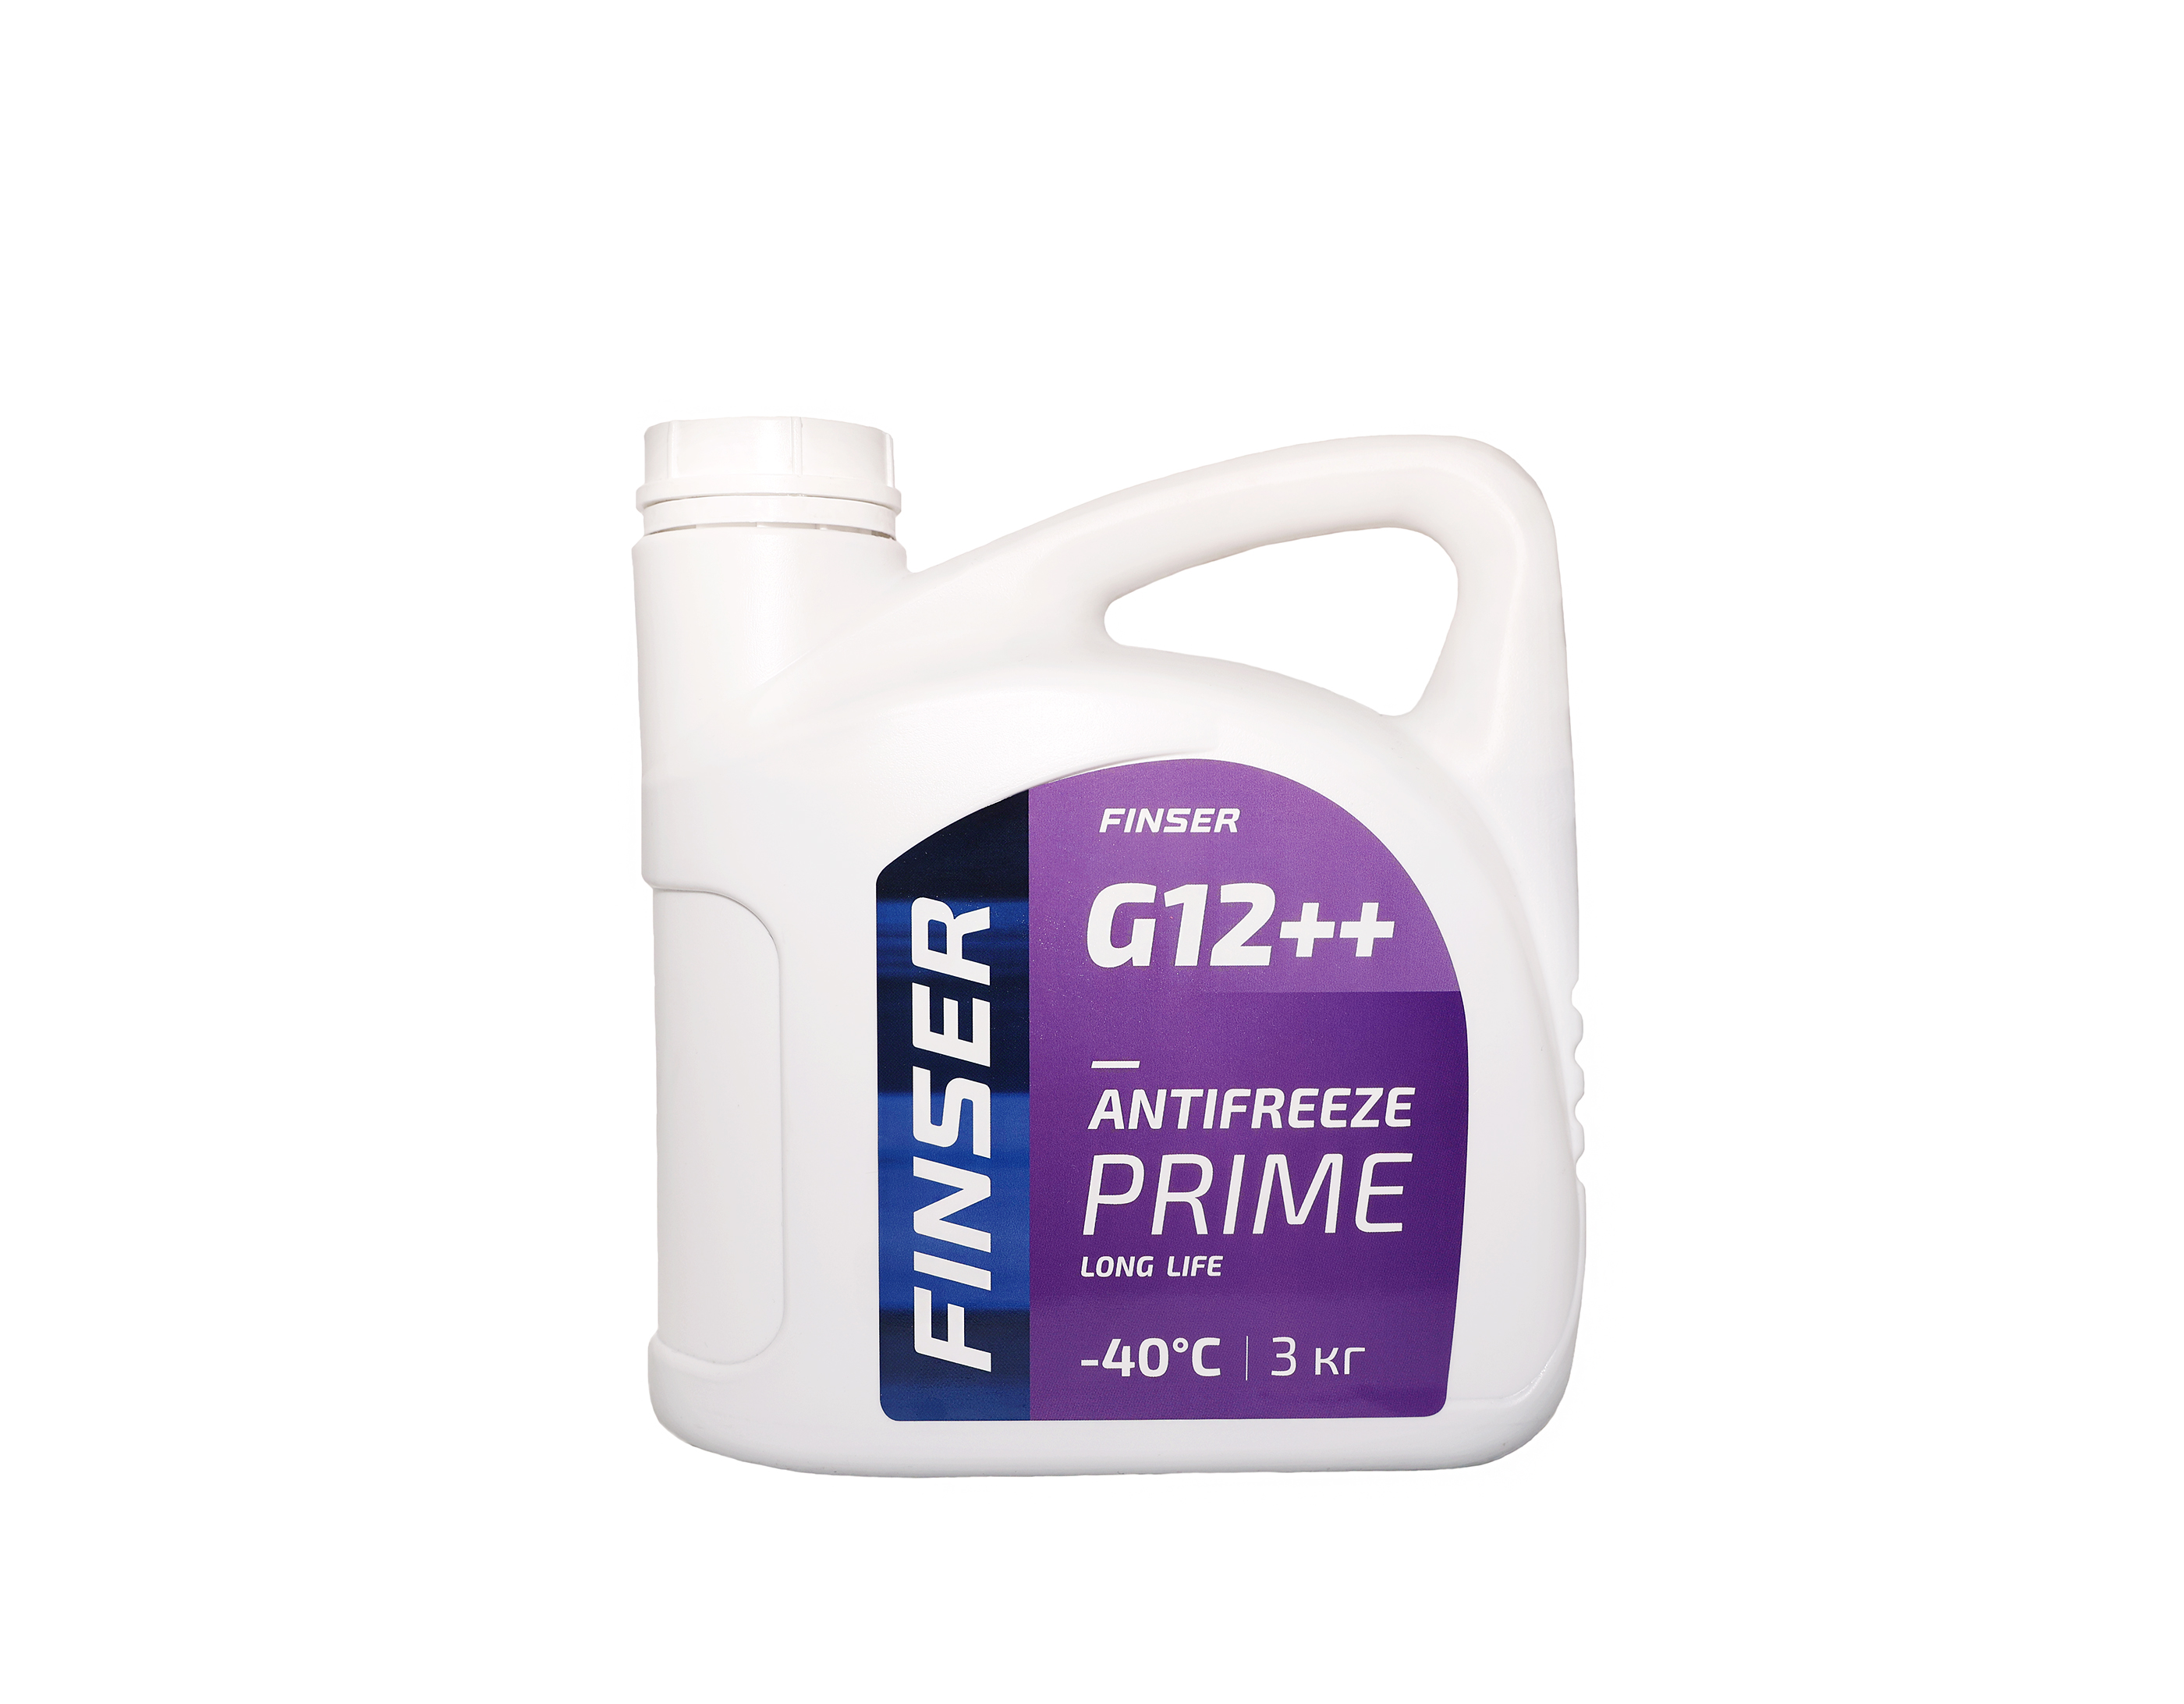 FINSER ANTIFREEZE PRIME  G12++ 3кг  (фиолетовый)